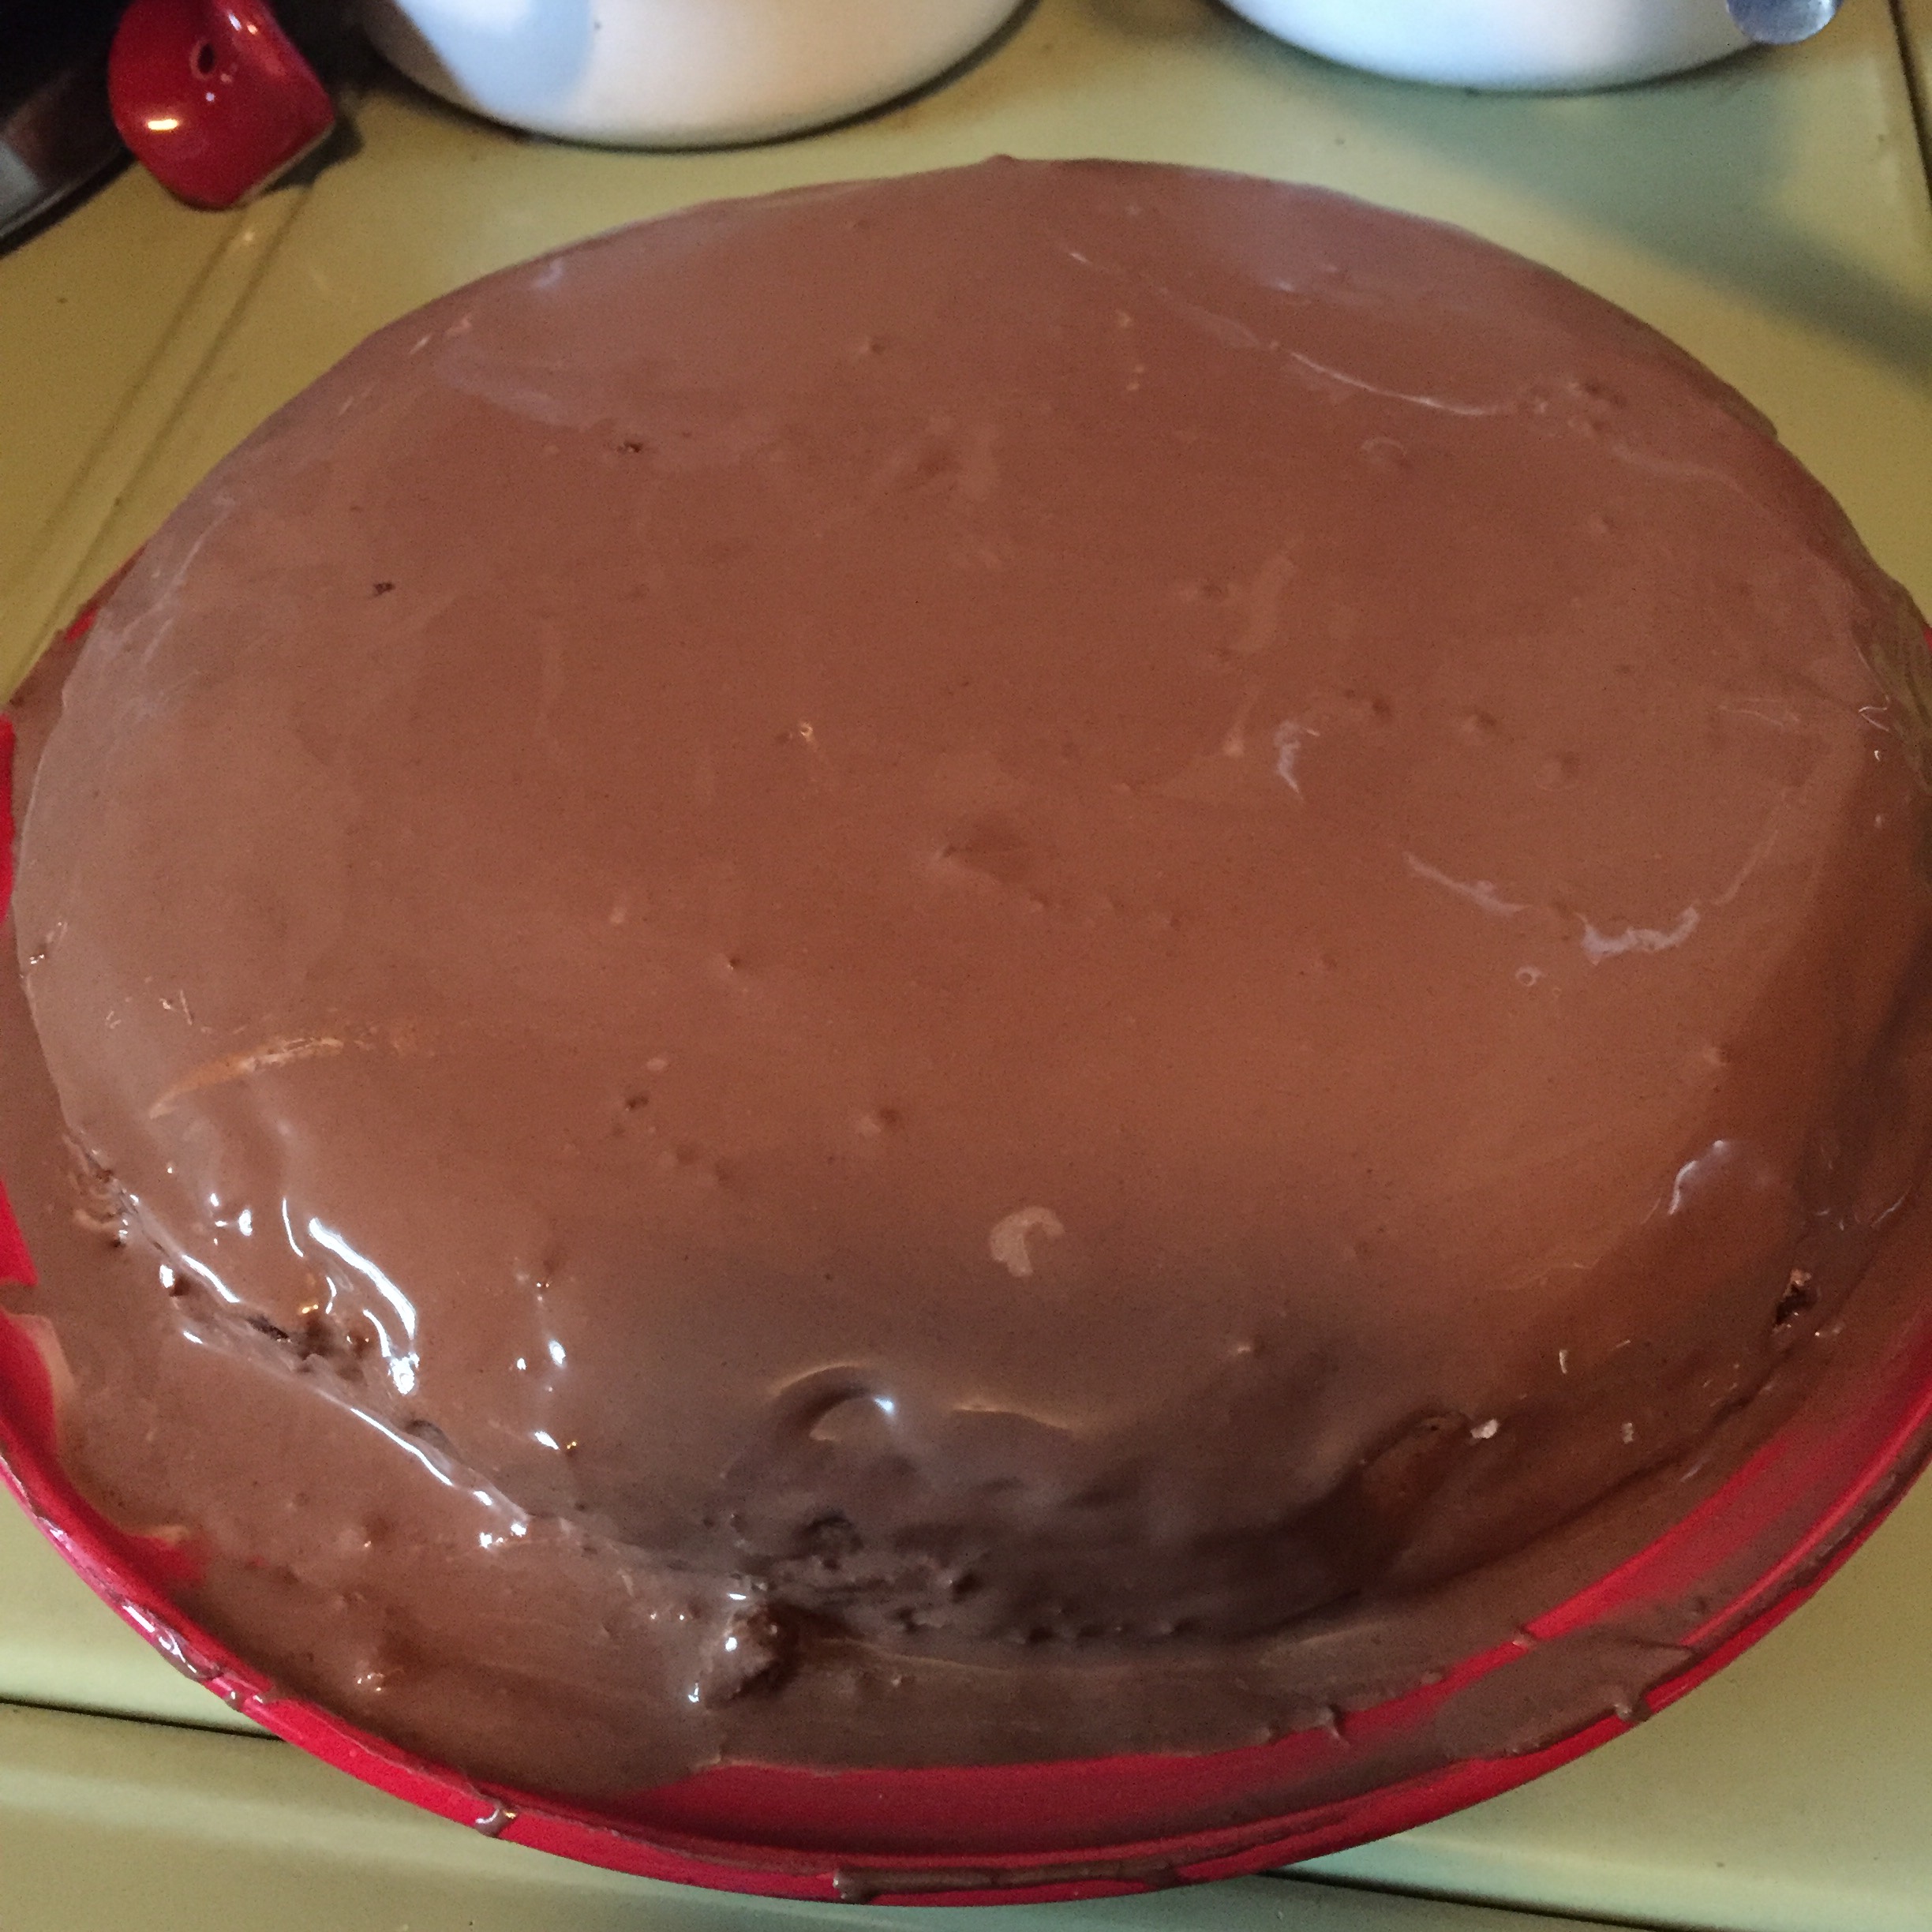 Whole Chocolate Cake